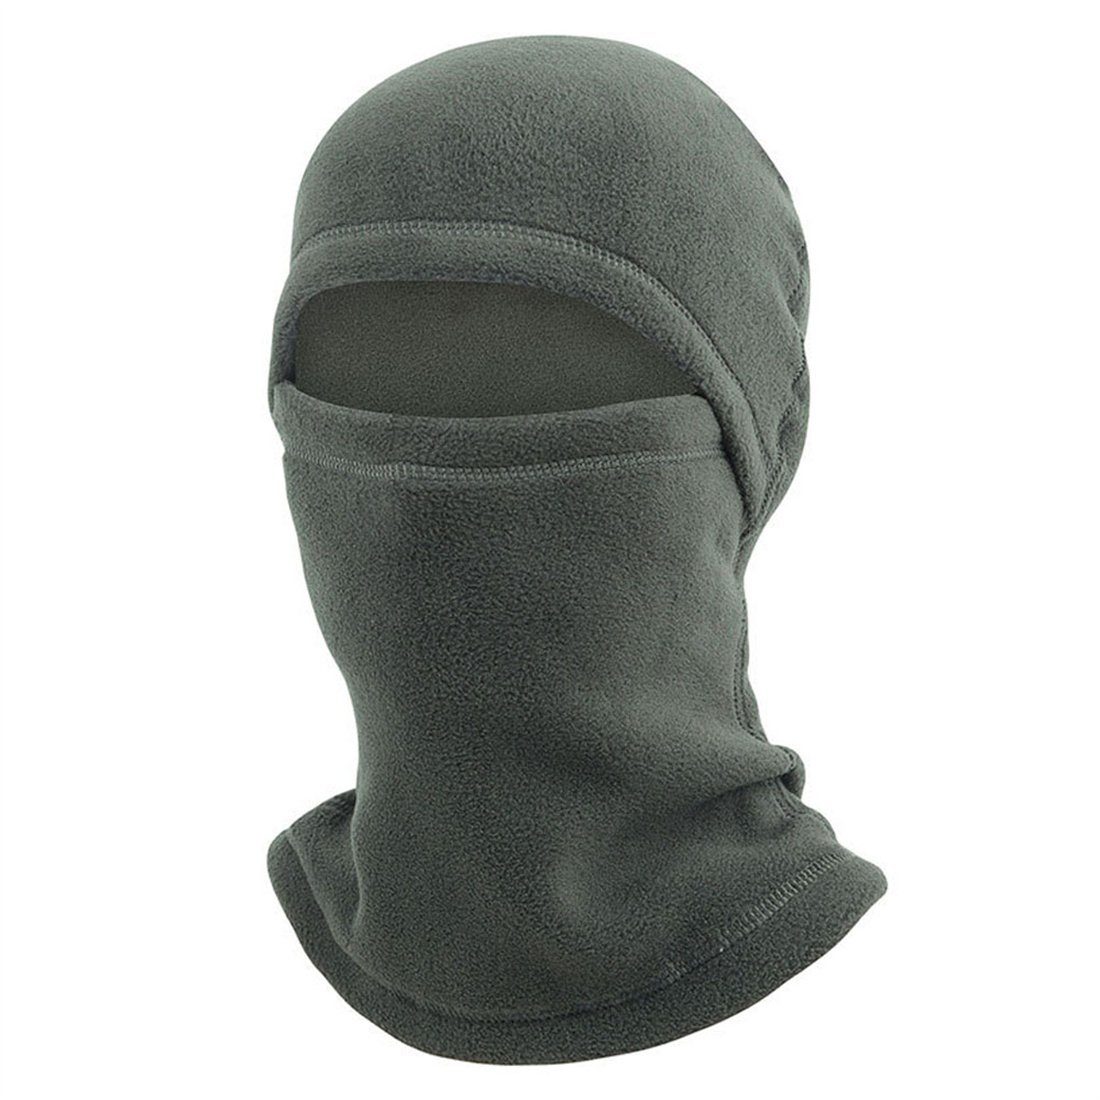 Warme Coldproof Ski Reiten DÖRÖY Sturmhaube Kopfbedeckung Winter Maske,Multifunktionale